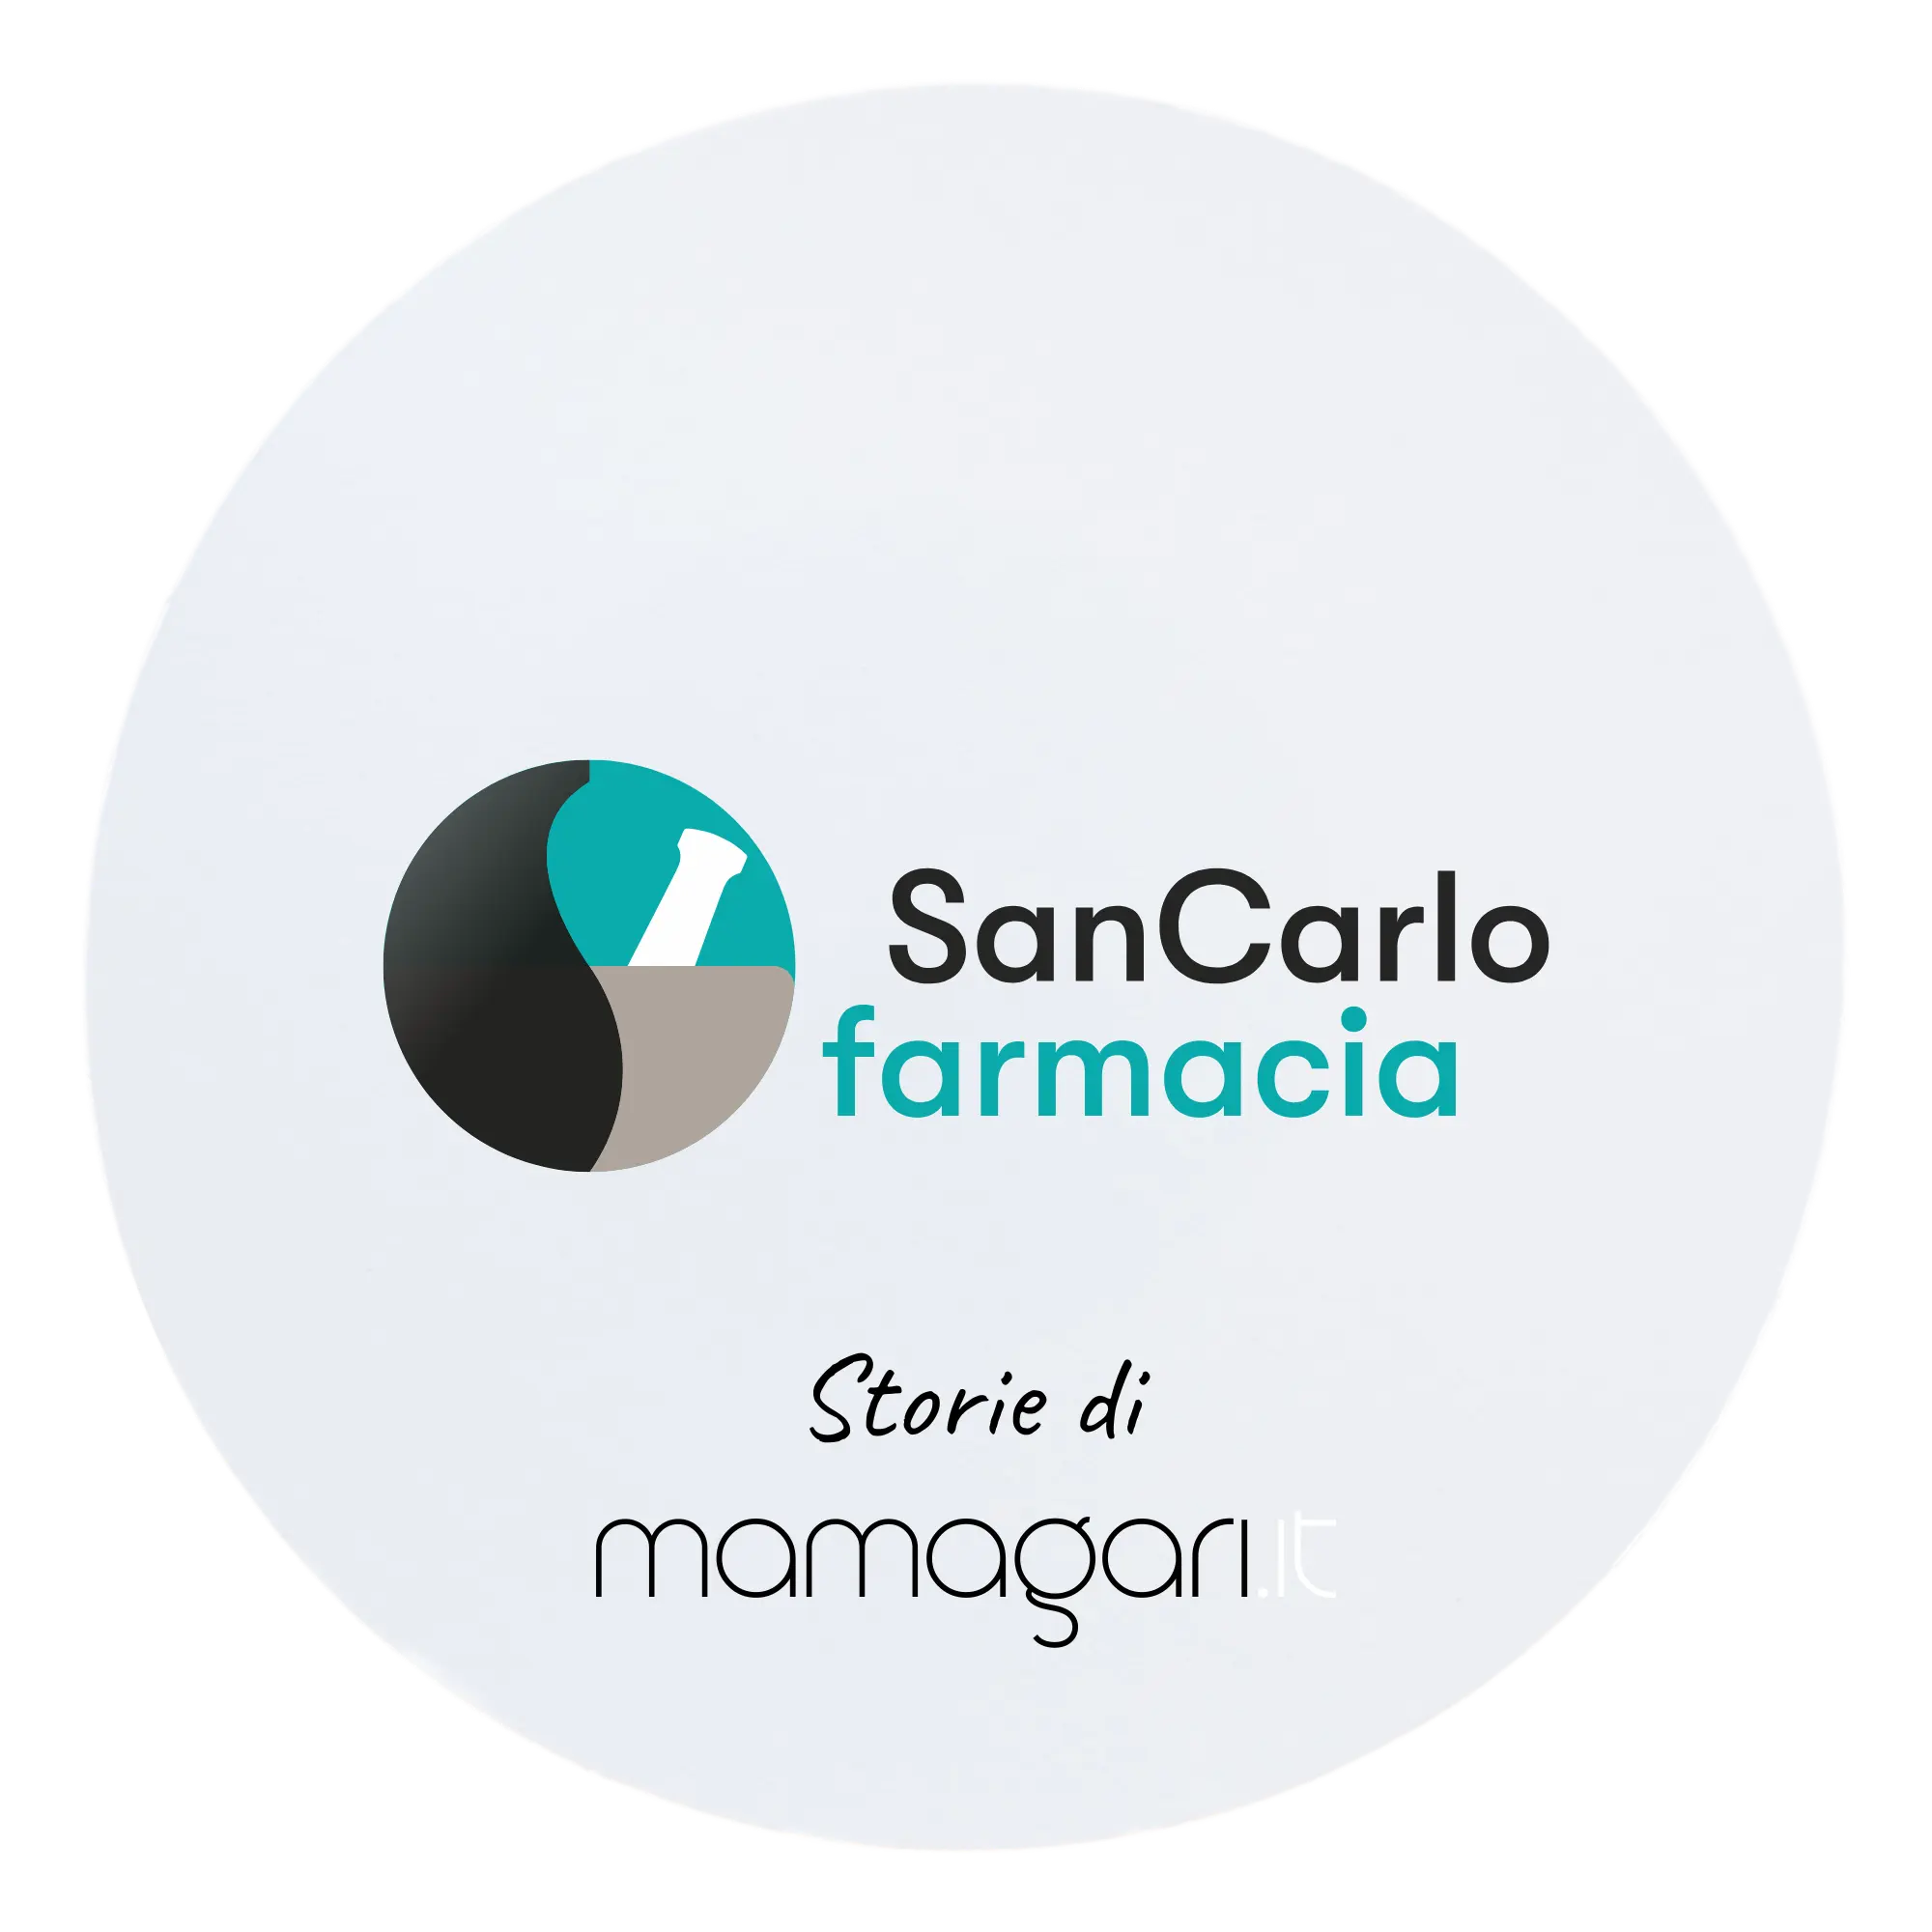 farmacia san carlo è seguita online da mamagari agenzia web marketing italia